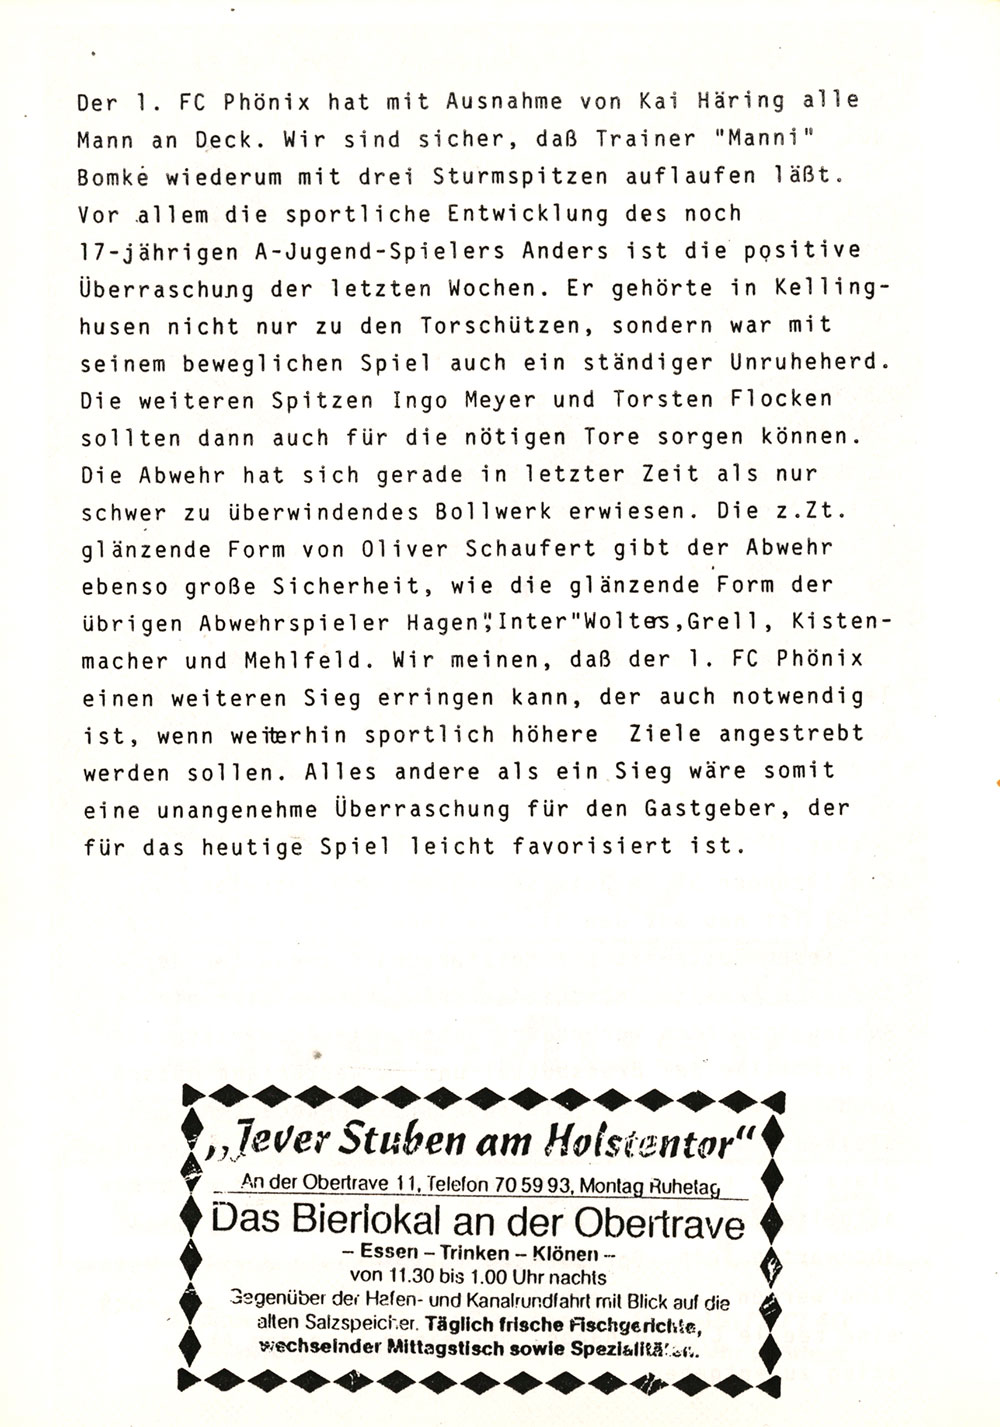 Der Phönix Express Ausgabe 97 vom 13. April 1986